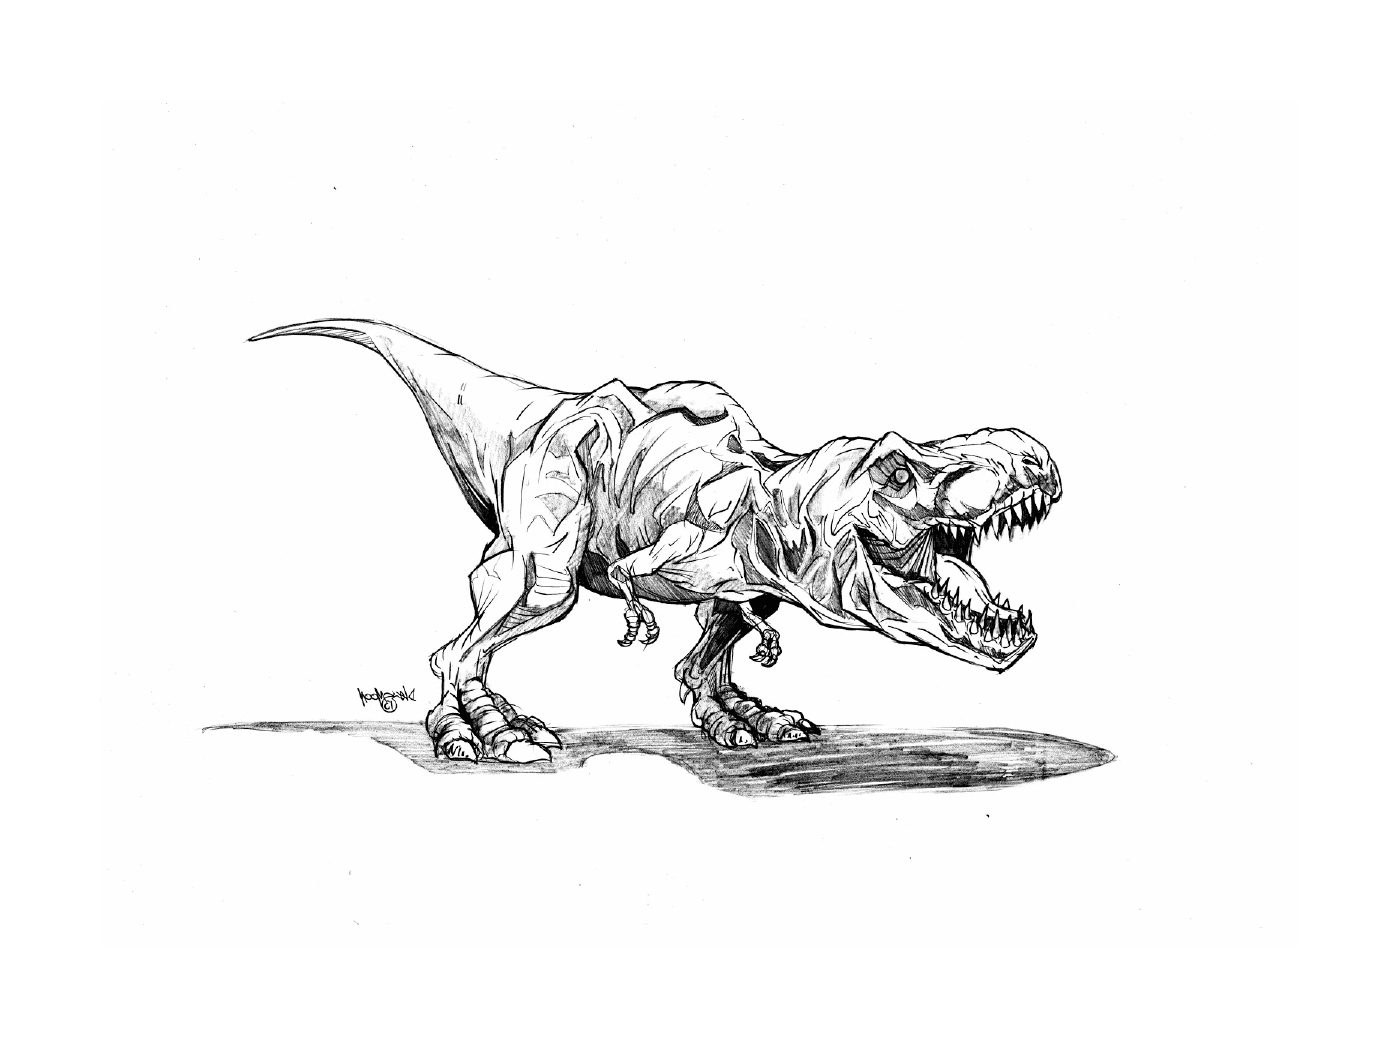  Jurassic Park, king of tyrannosaurs 